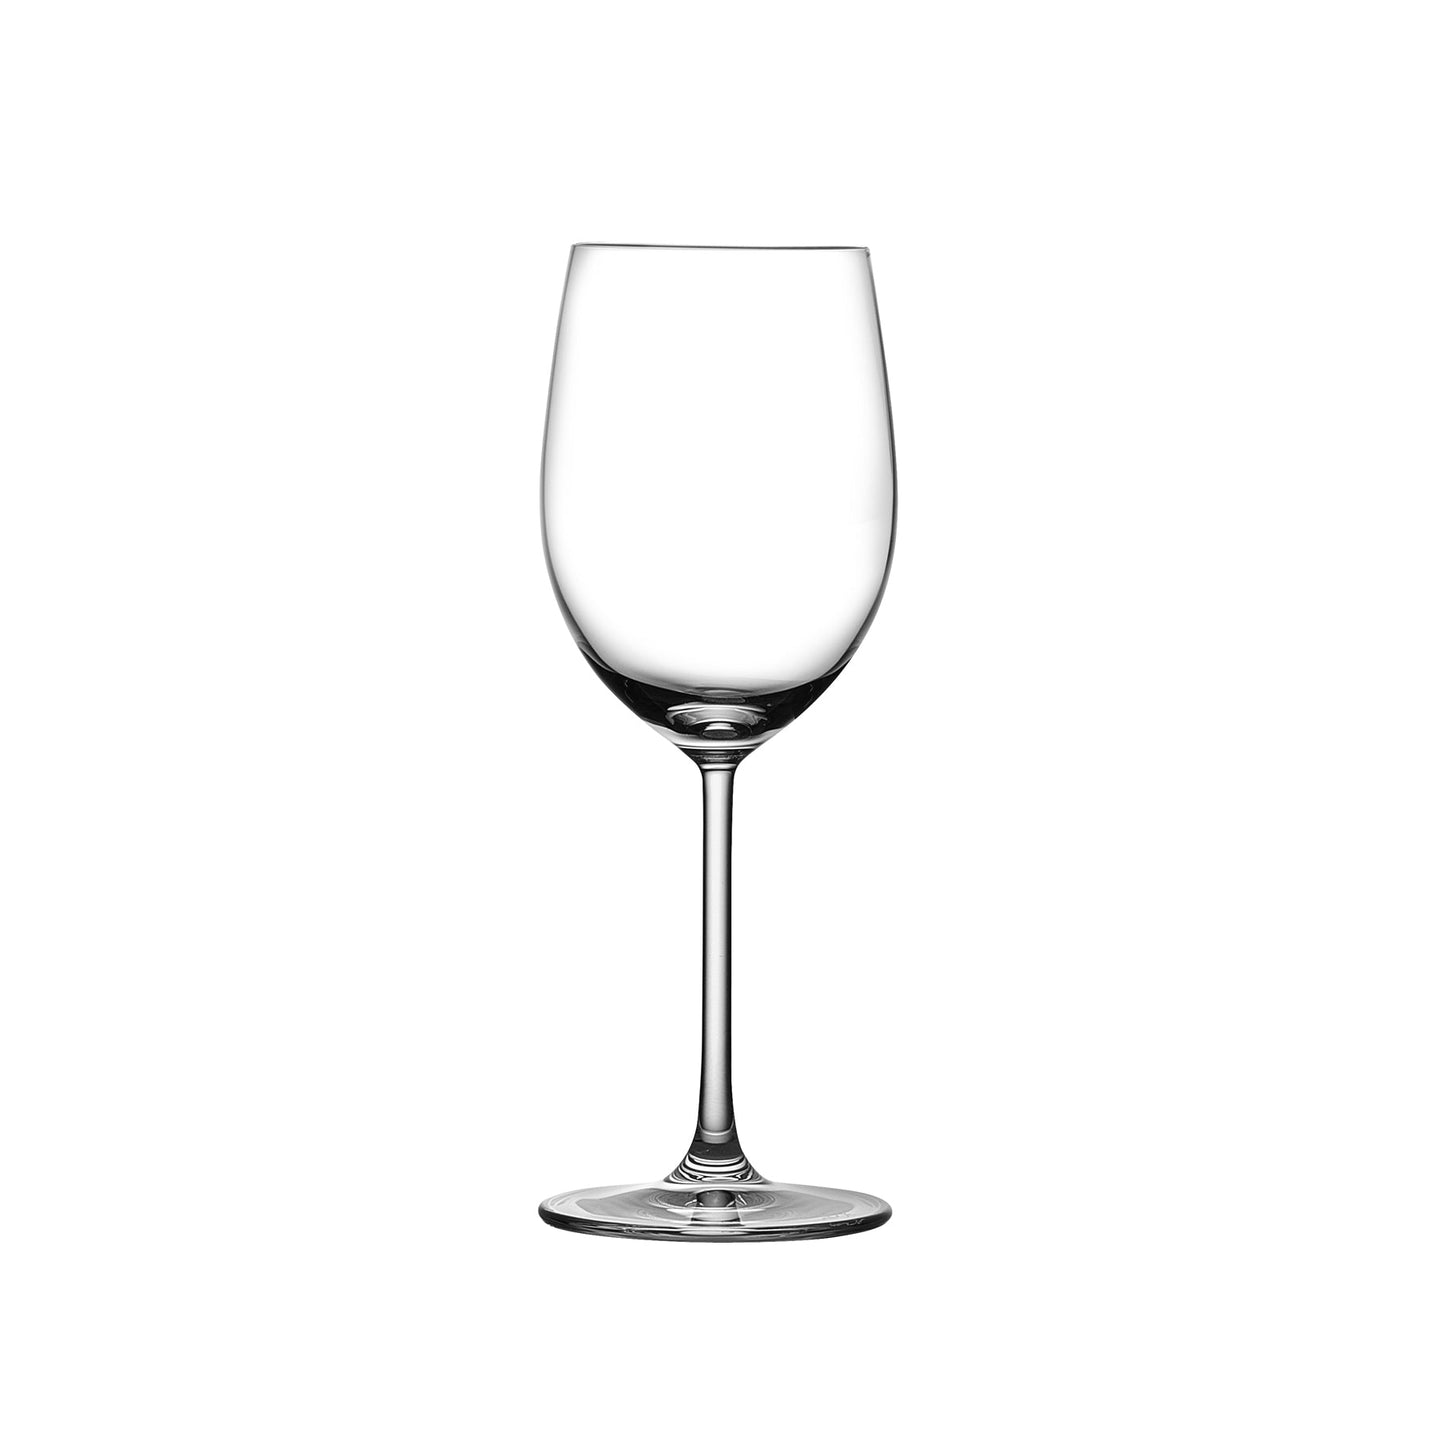 Vintage White Wine Glass (Set of 4)